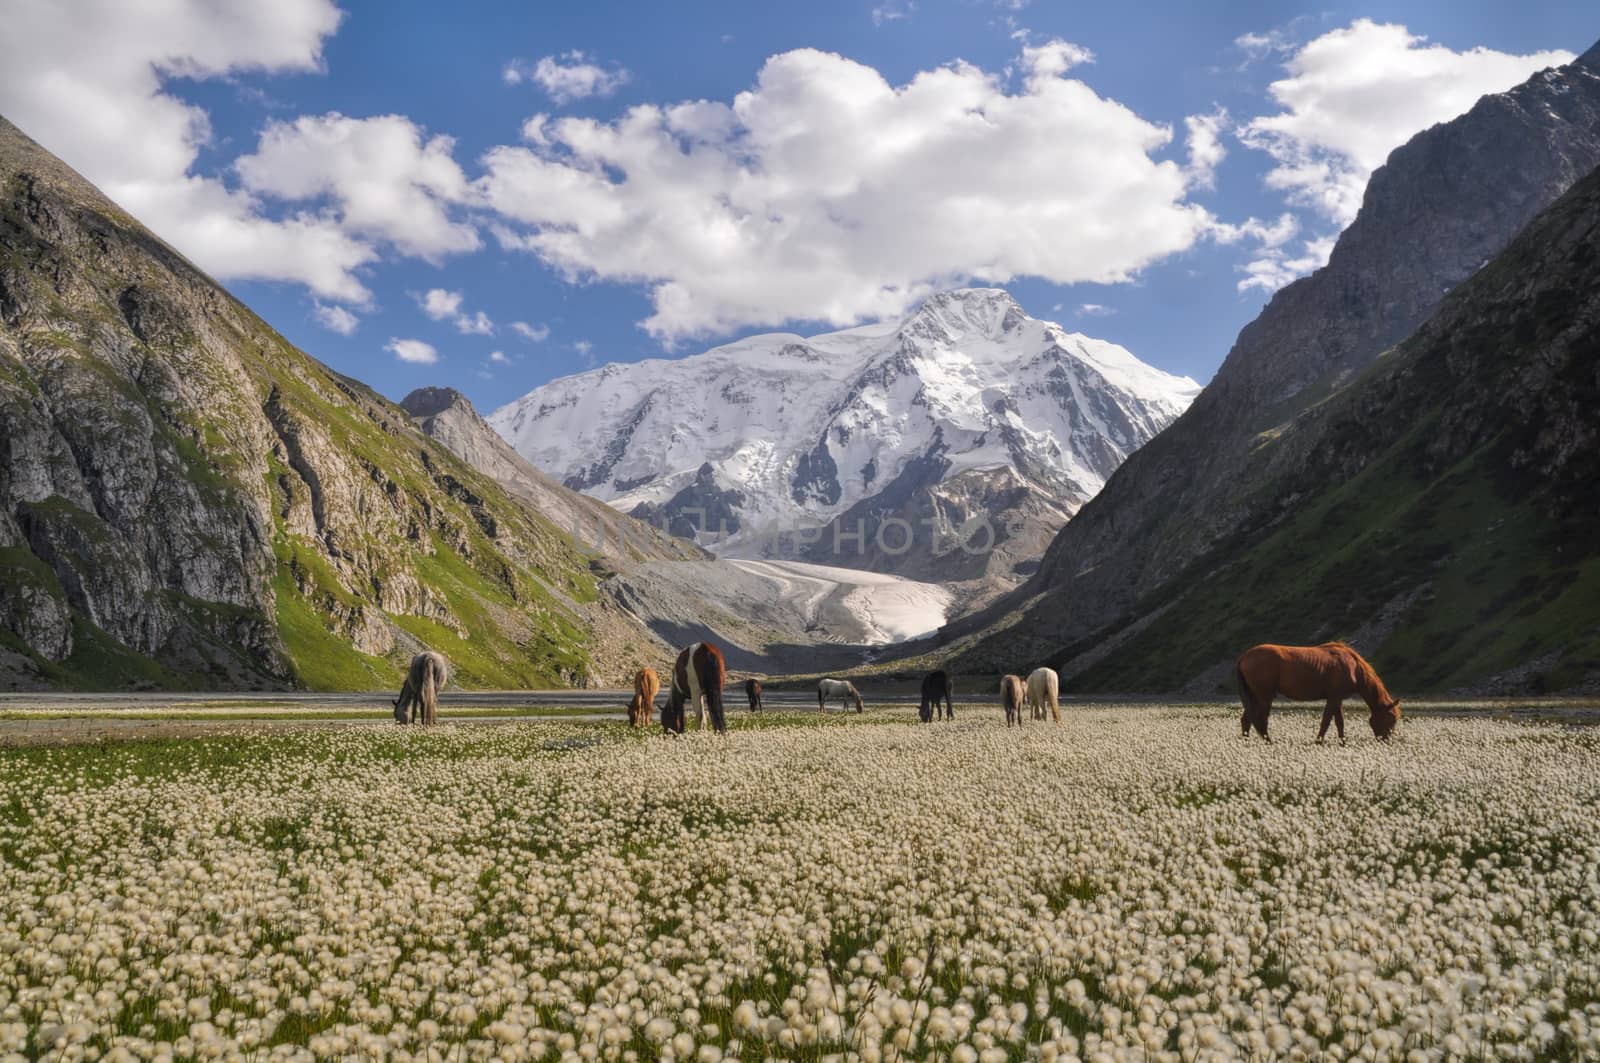 Tian-Shan in Kyrgyzstan by MichalKnitl